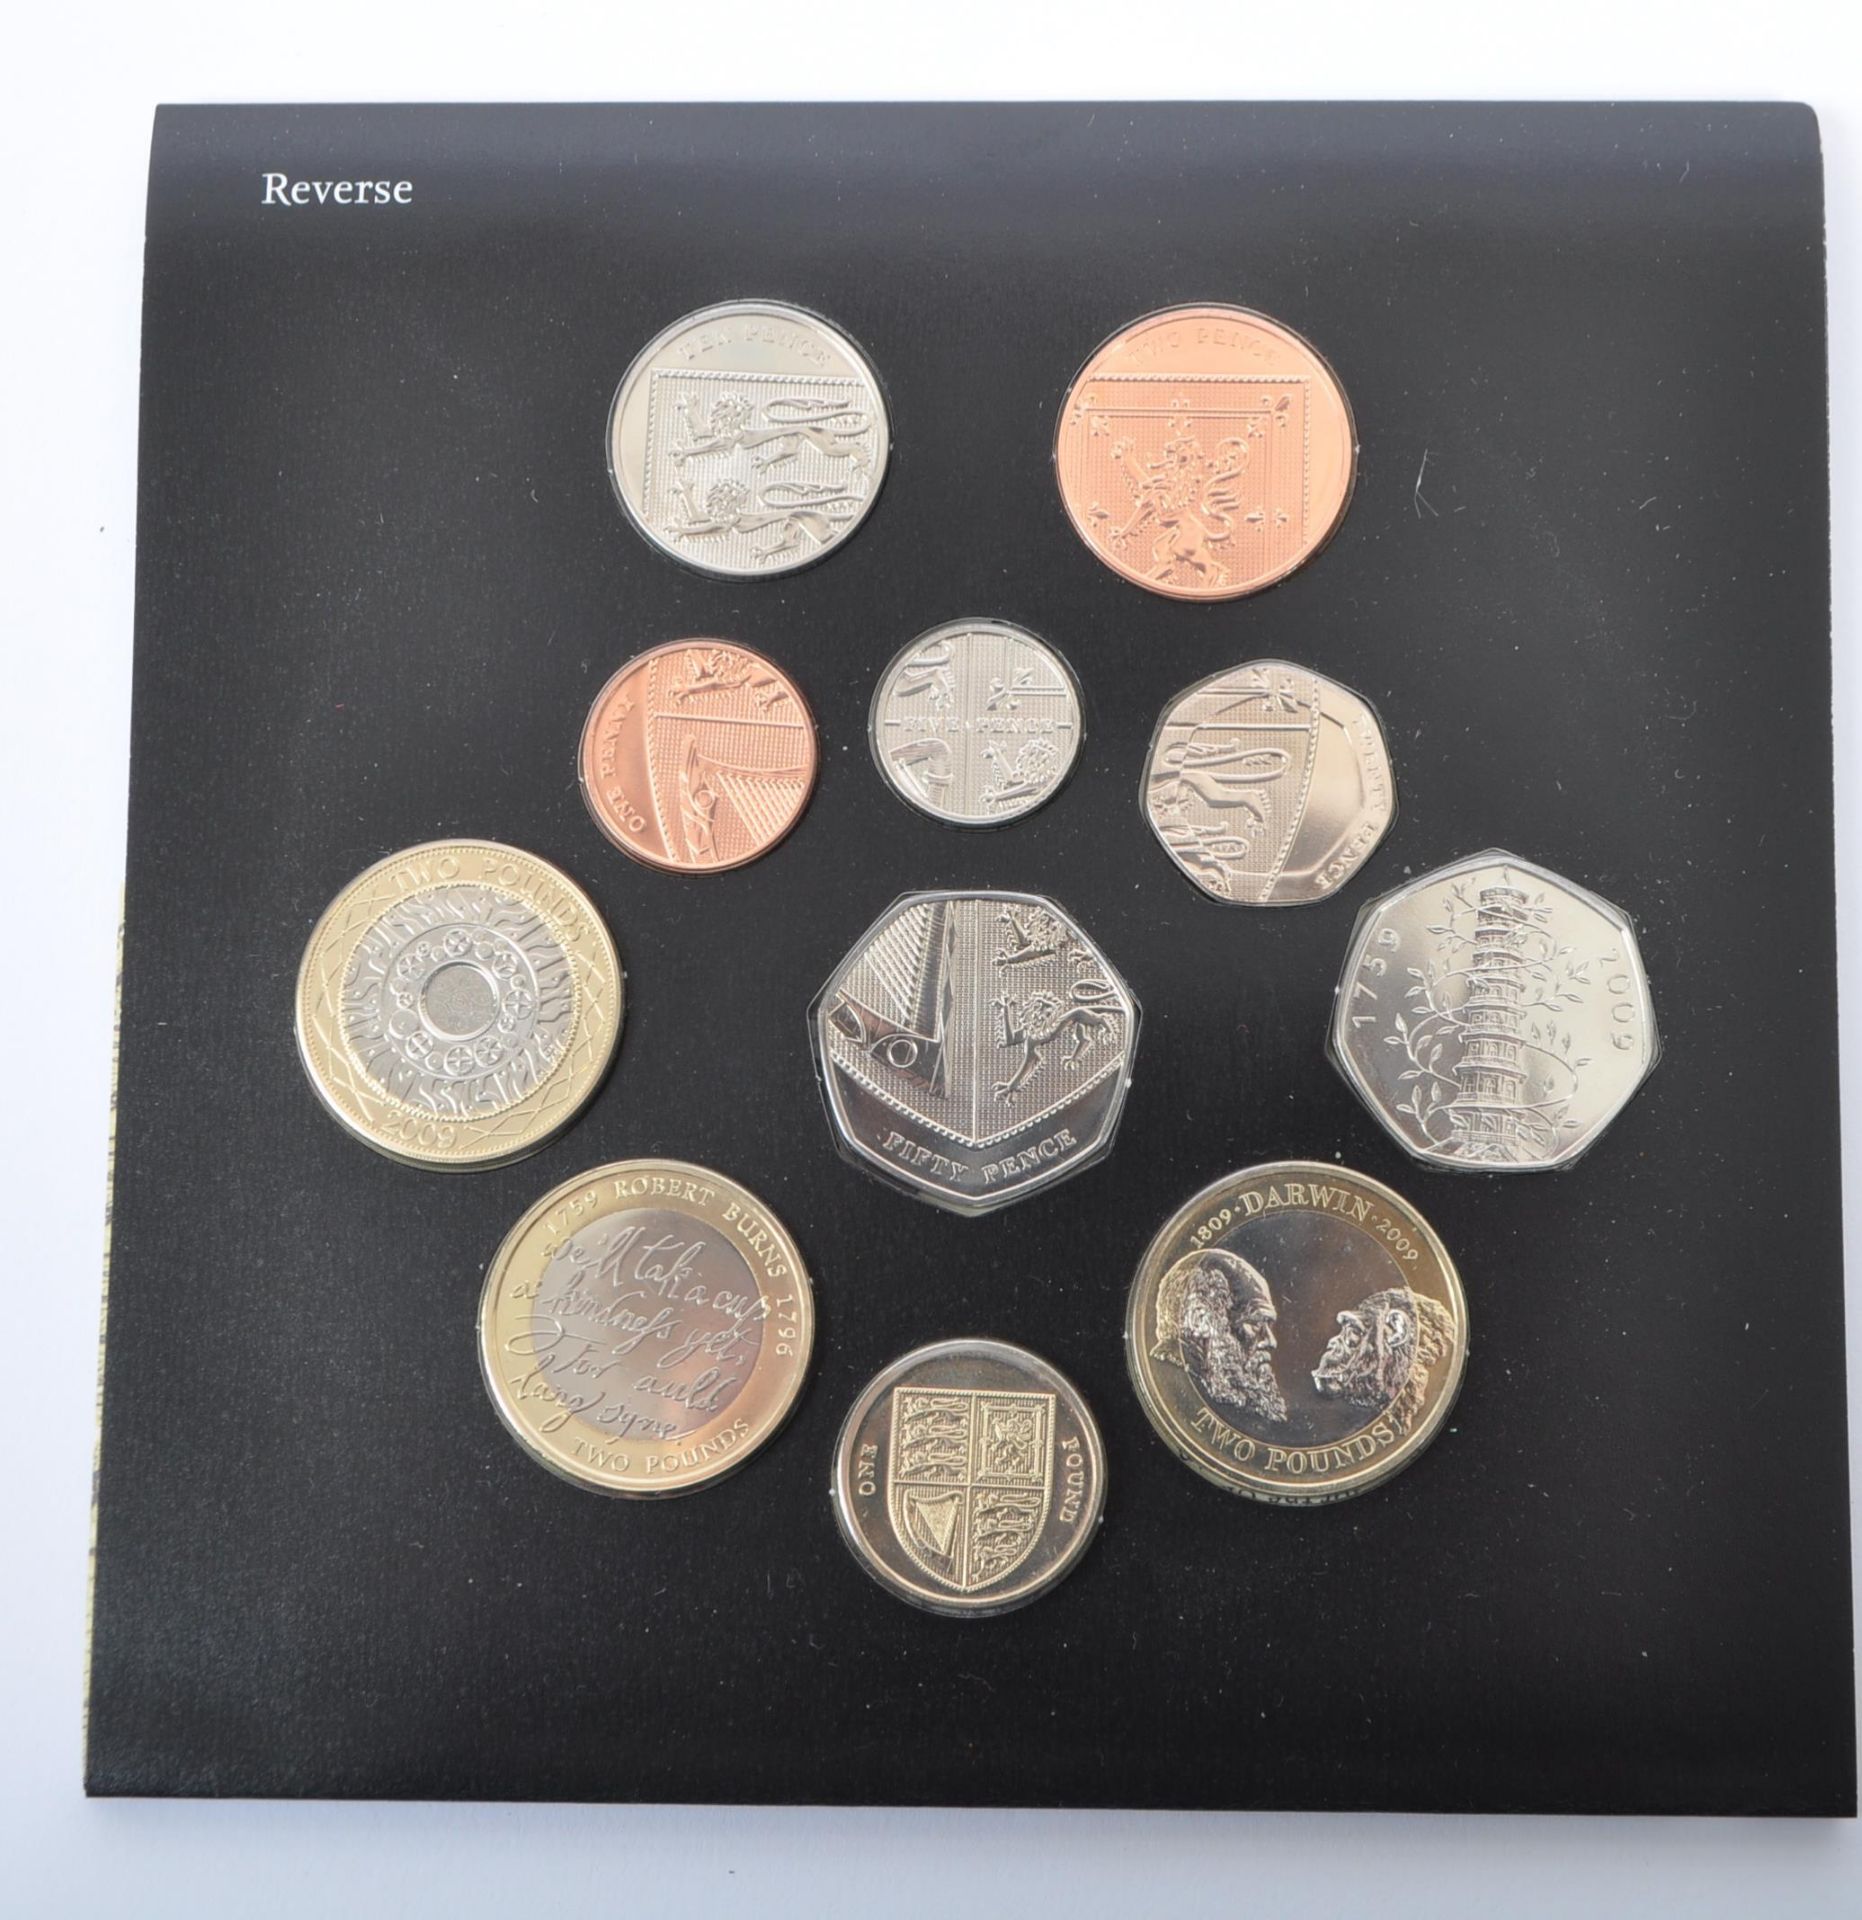 2009 ROYAL MINT UK BRILLIANT COIN SET - KEW GARDEN 50P - Image 3 of 5